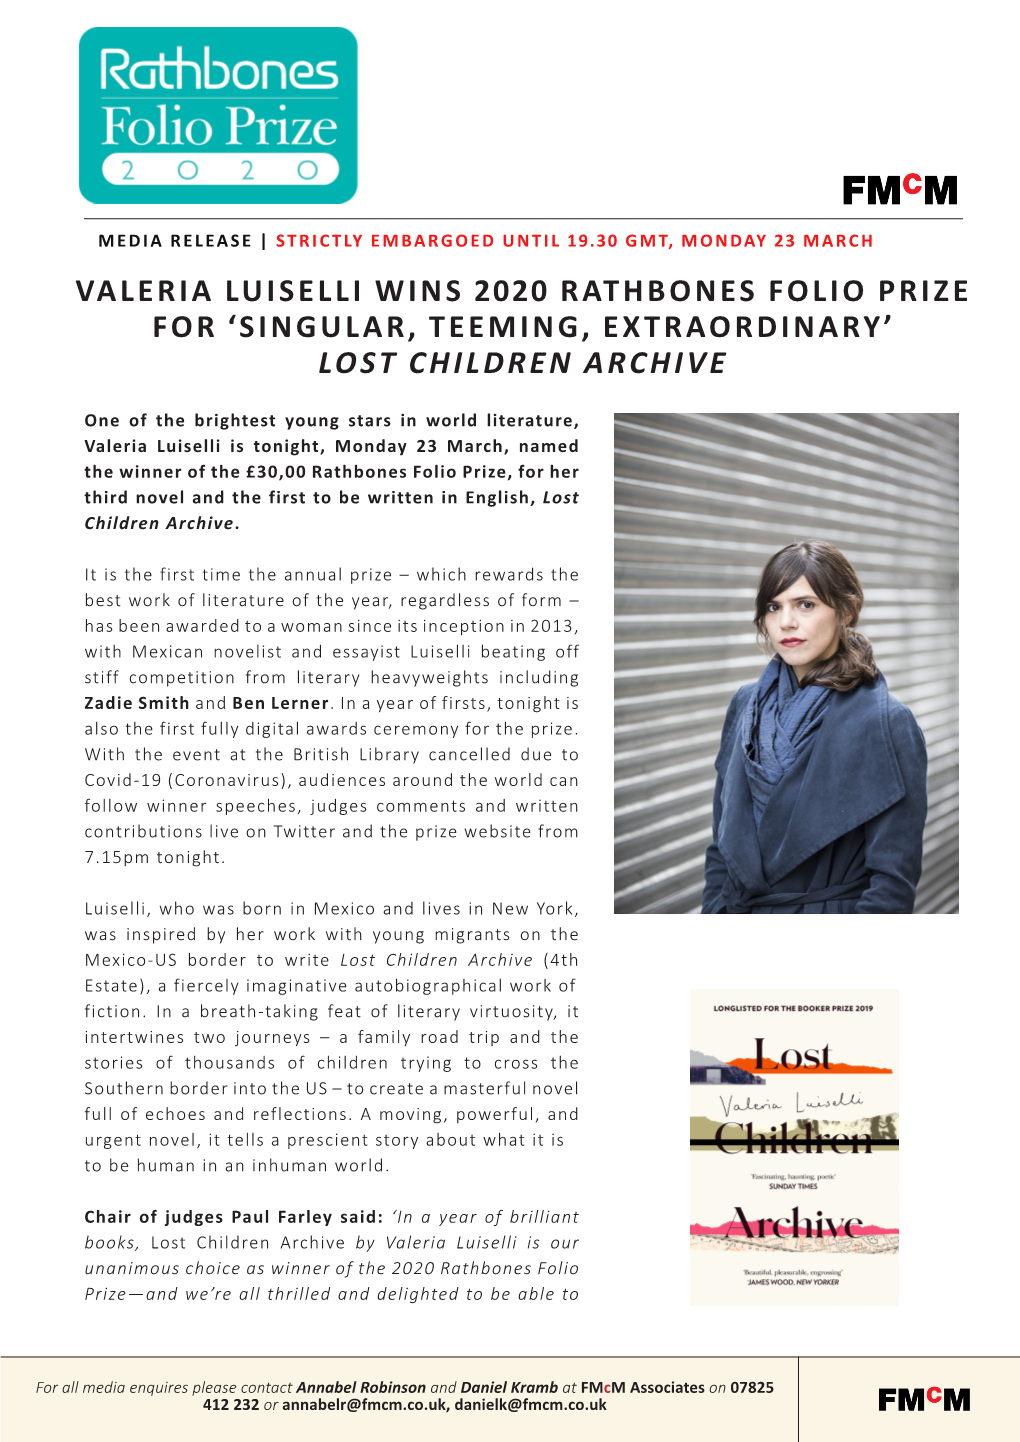 Valeria Luiselli Wins 2020 Rathbones Folio Prize for ‘Singular, Teeming, Extraordinary’ Lost Children Archive